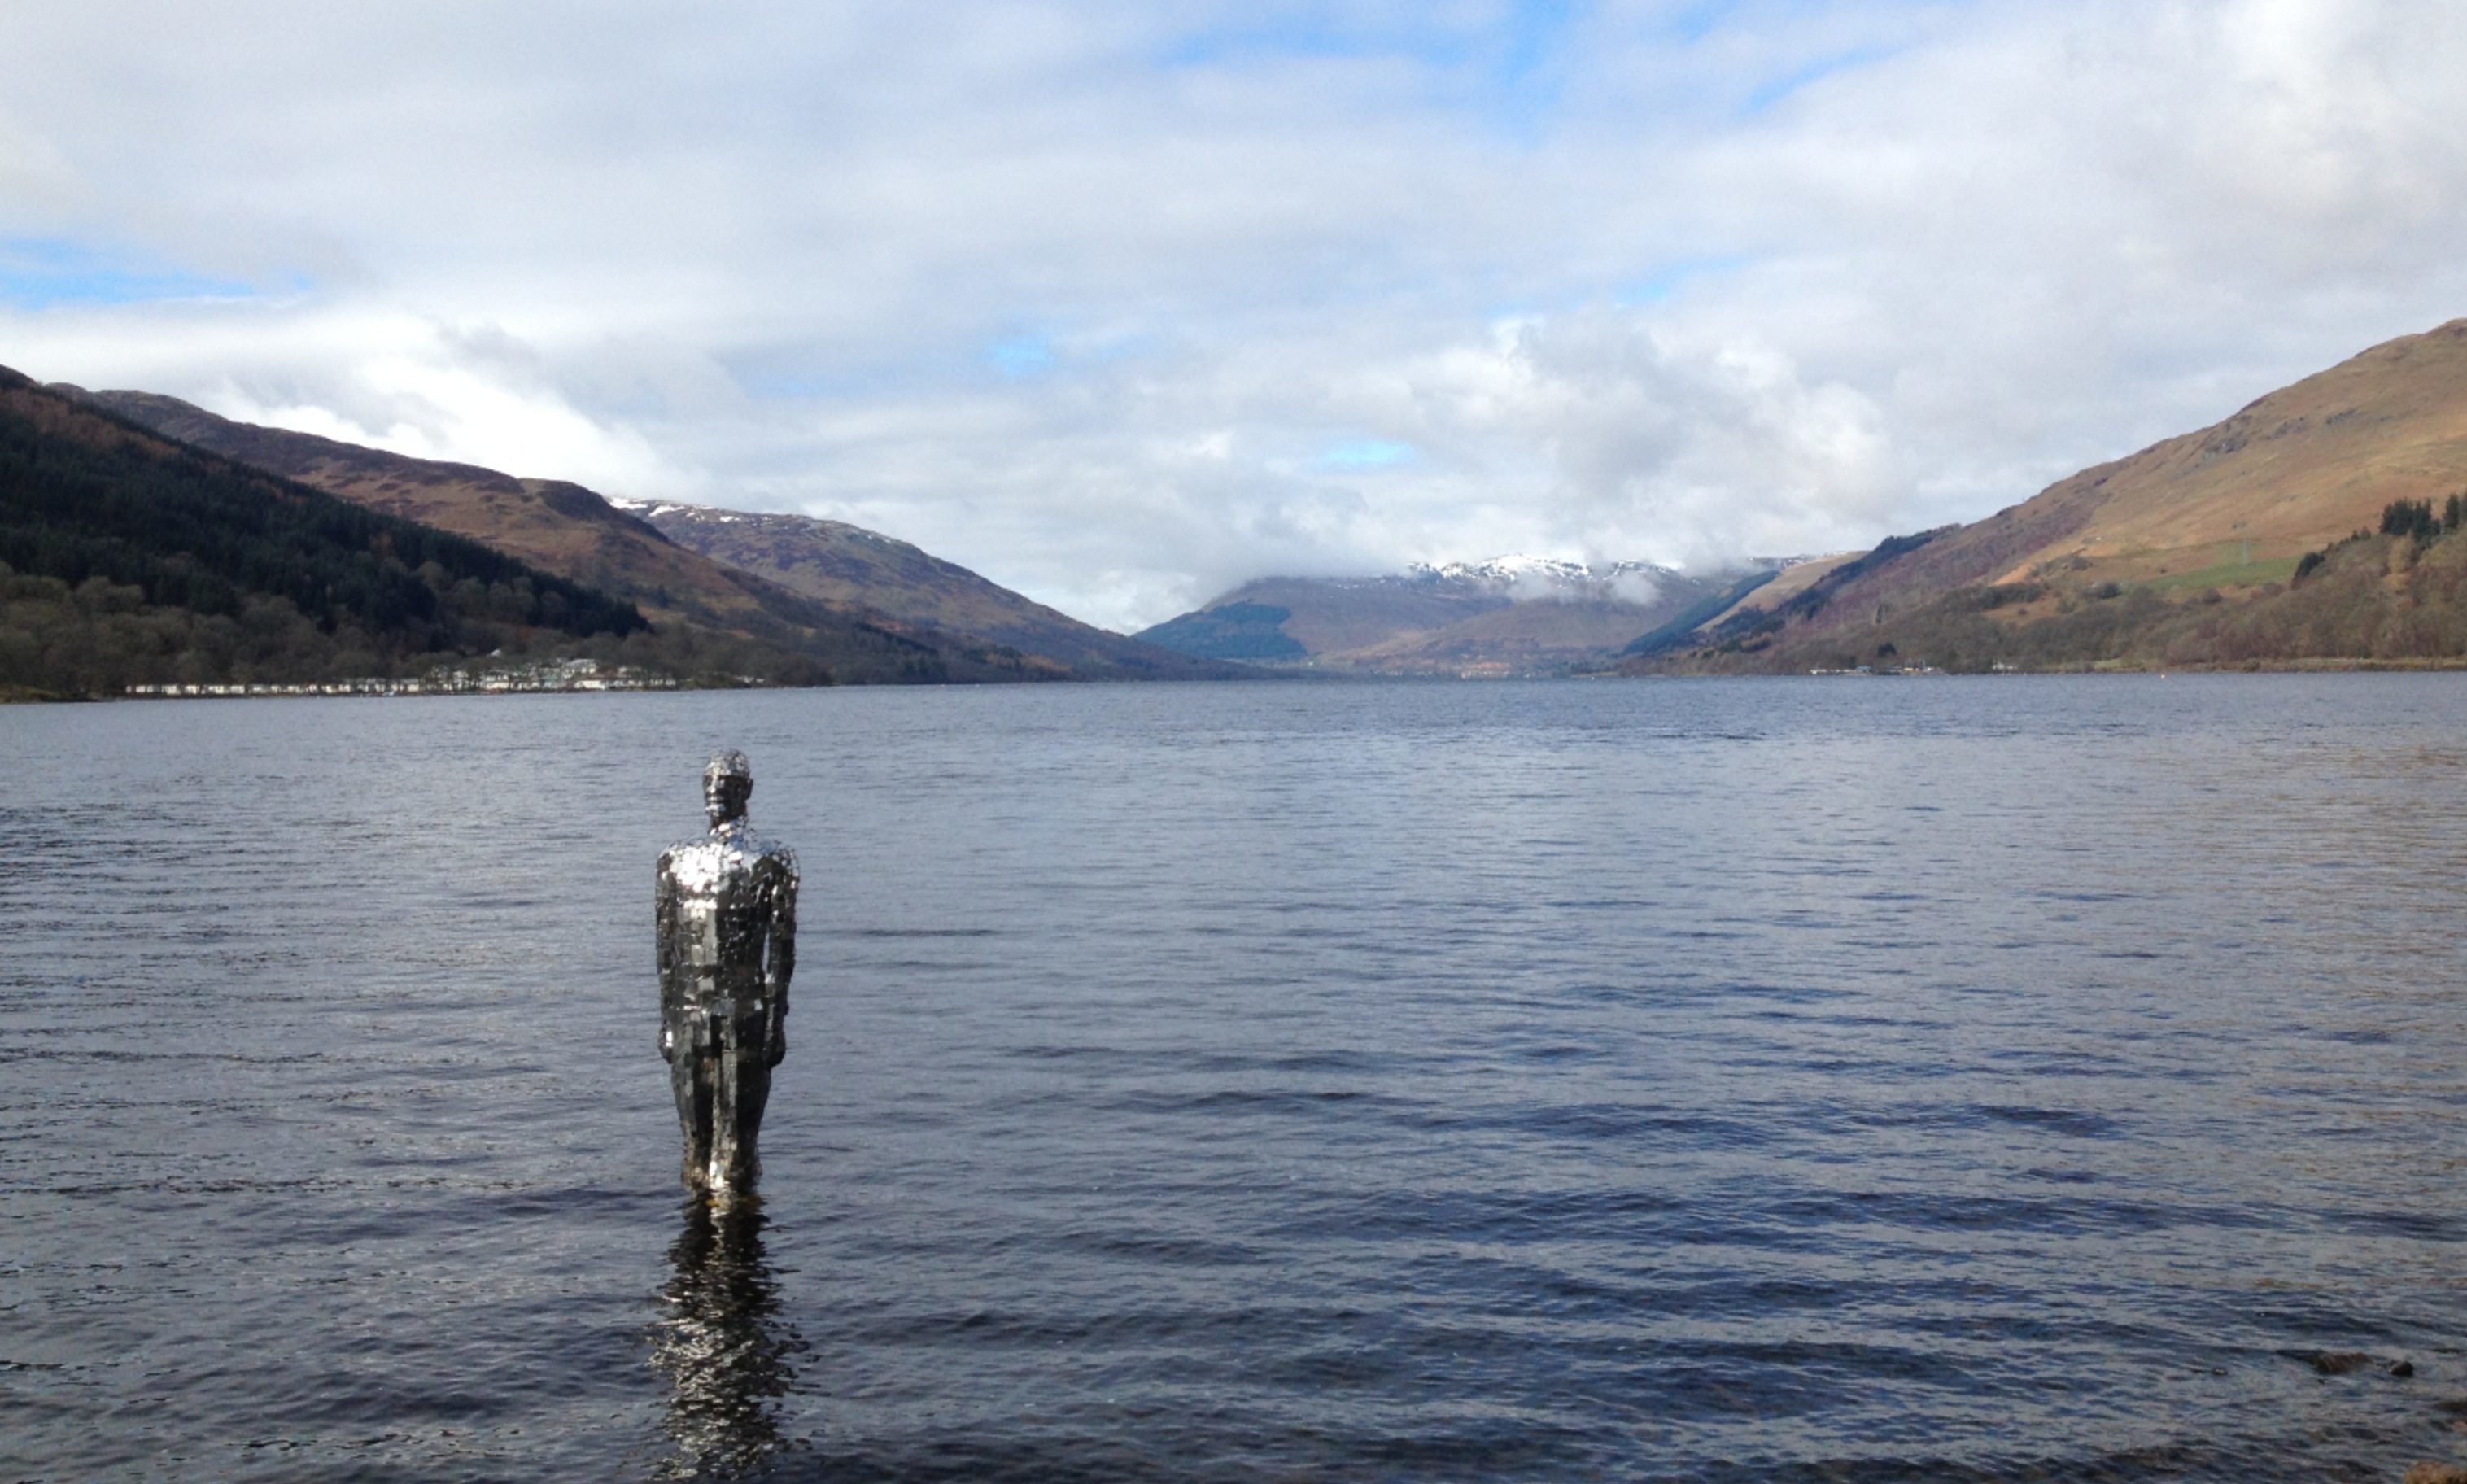 Loch Earn's "mirror man" art installation by Rob Mulholland.